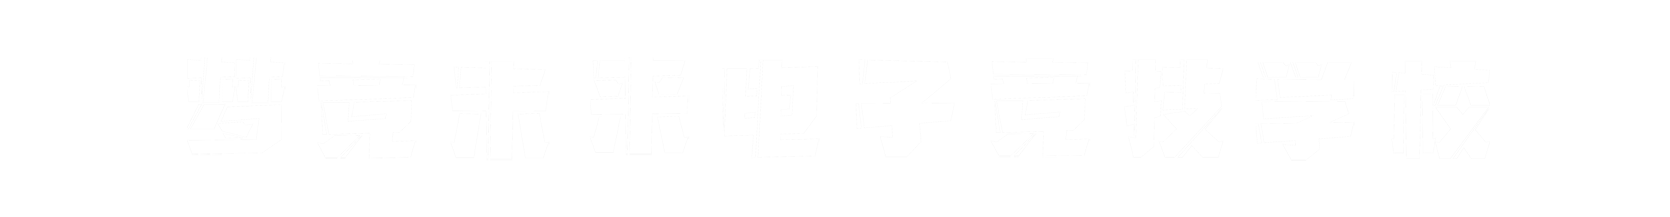 梦竞未来福州banner字